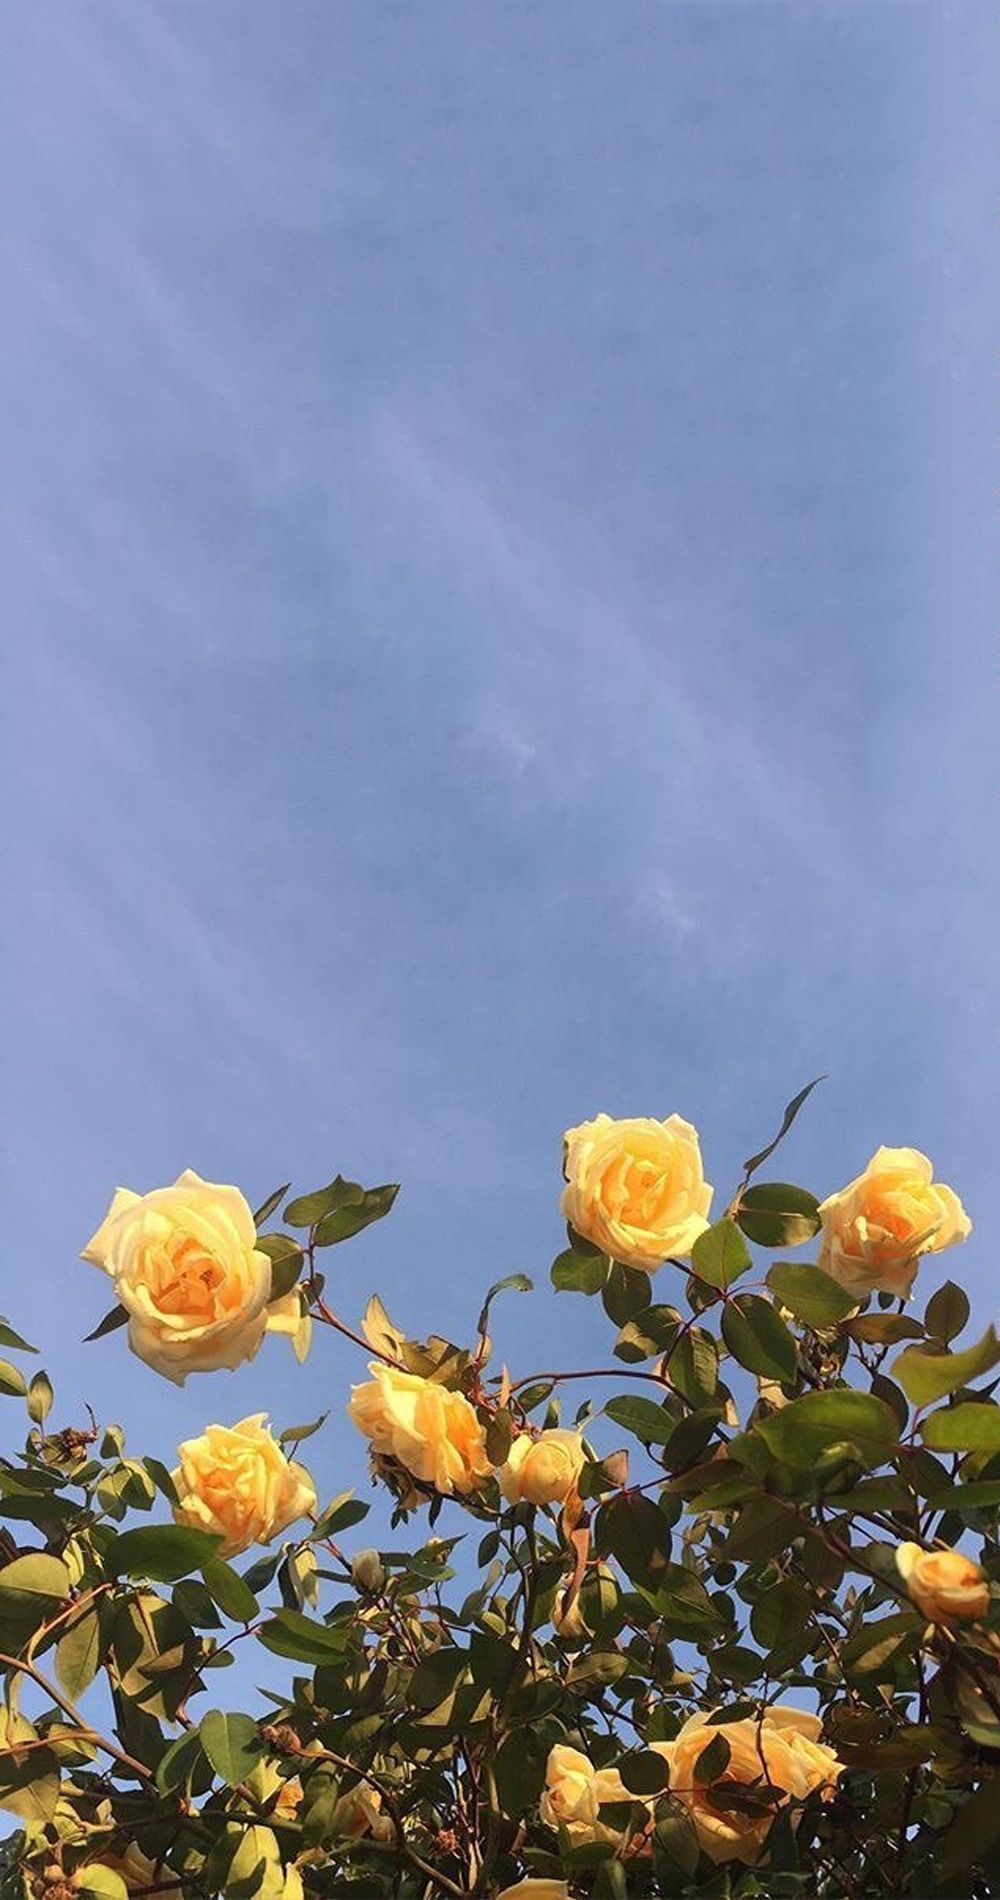 Yellow roses against a blue sky - Flower, garden